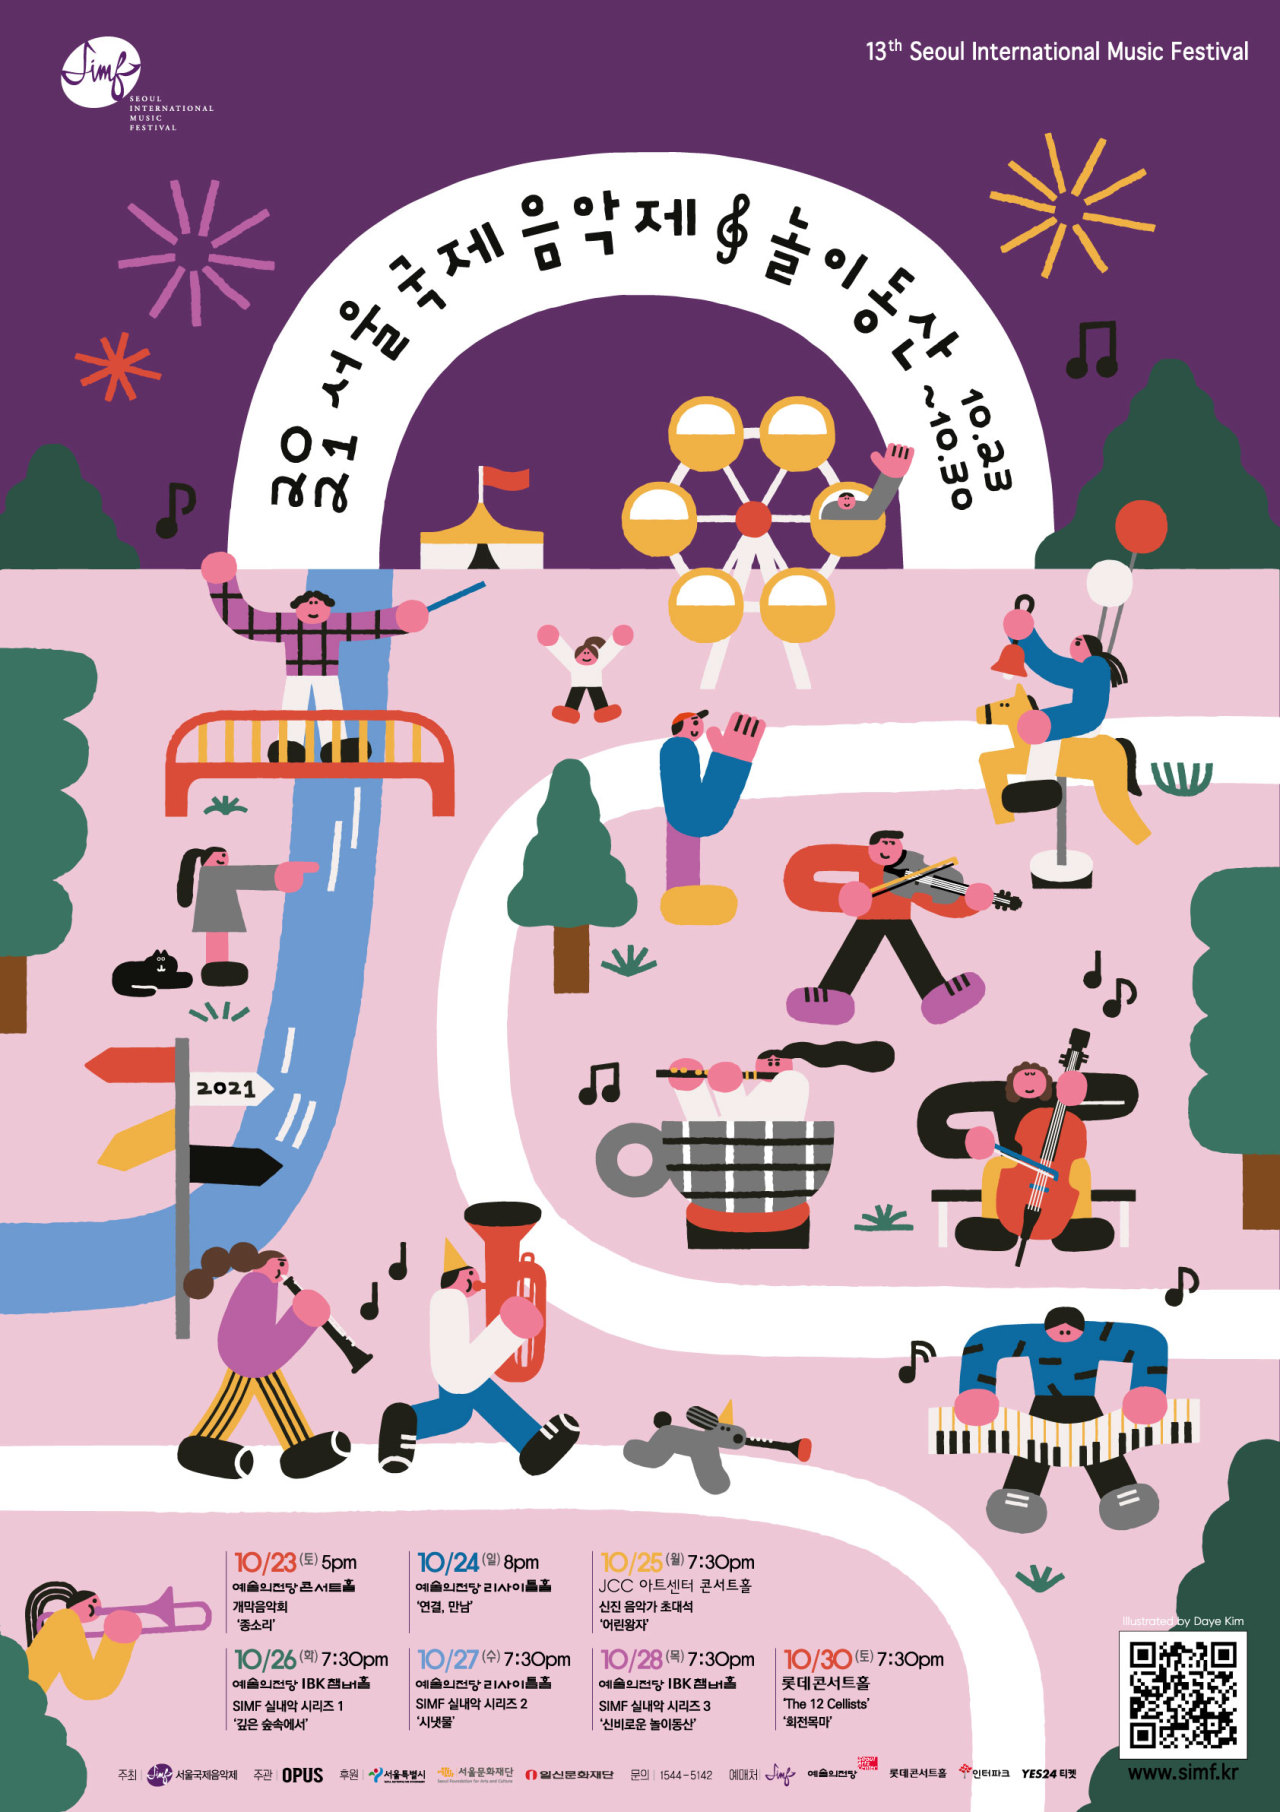 Poster image for the 13th Seoul International Music Festival “Amusement Park” (SIMF)